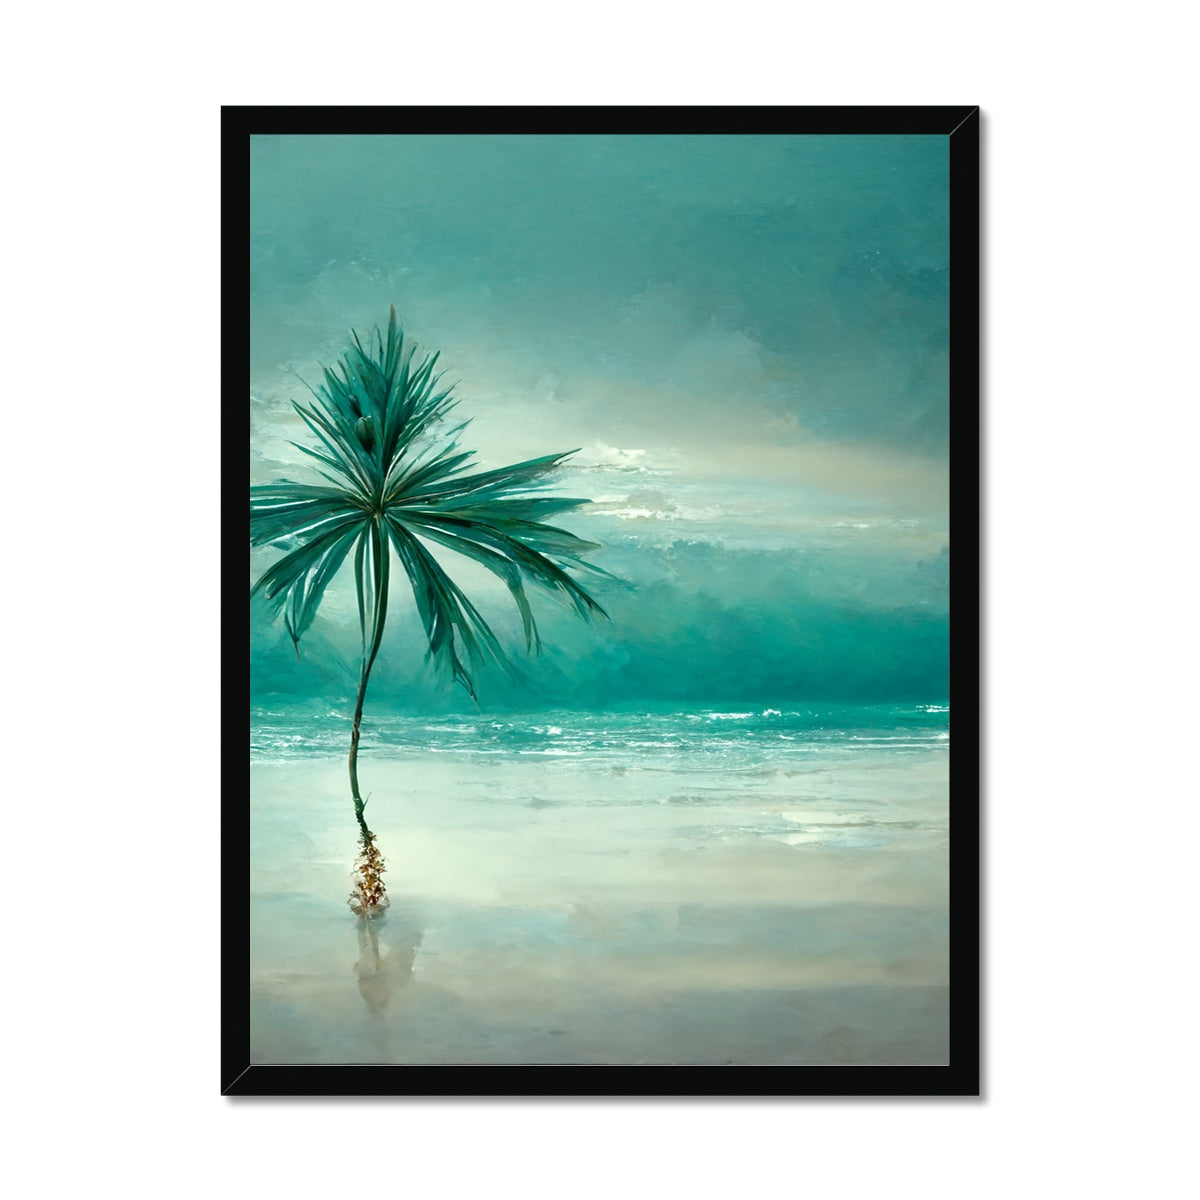 Lonesome Palm Framed Print